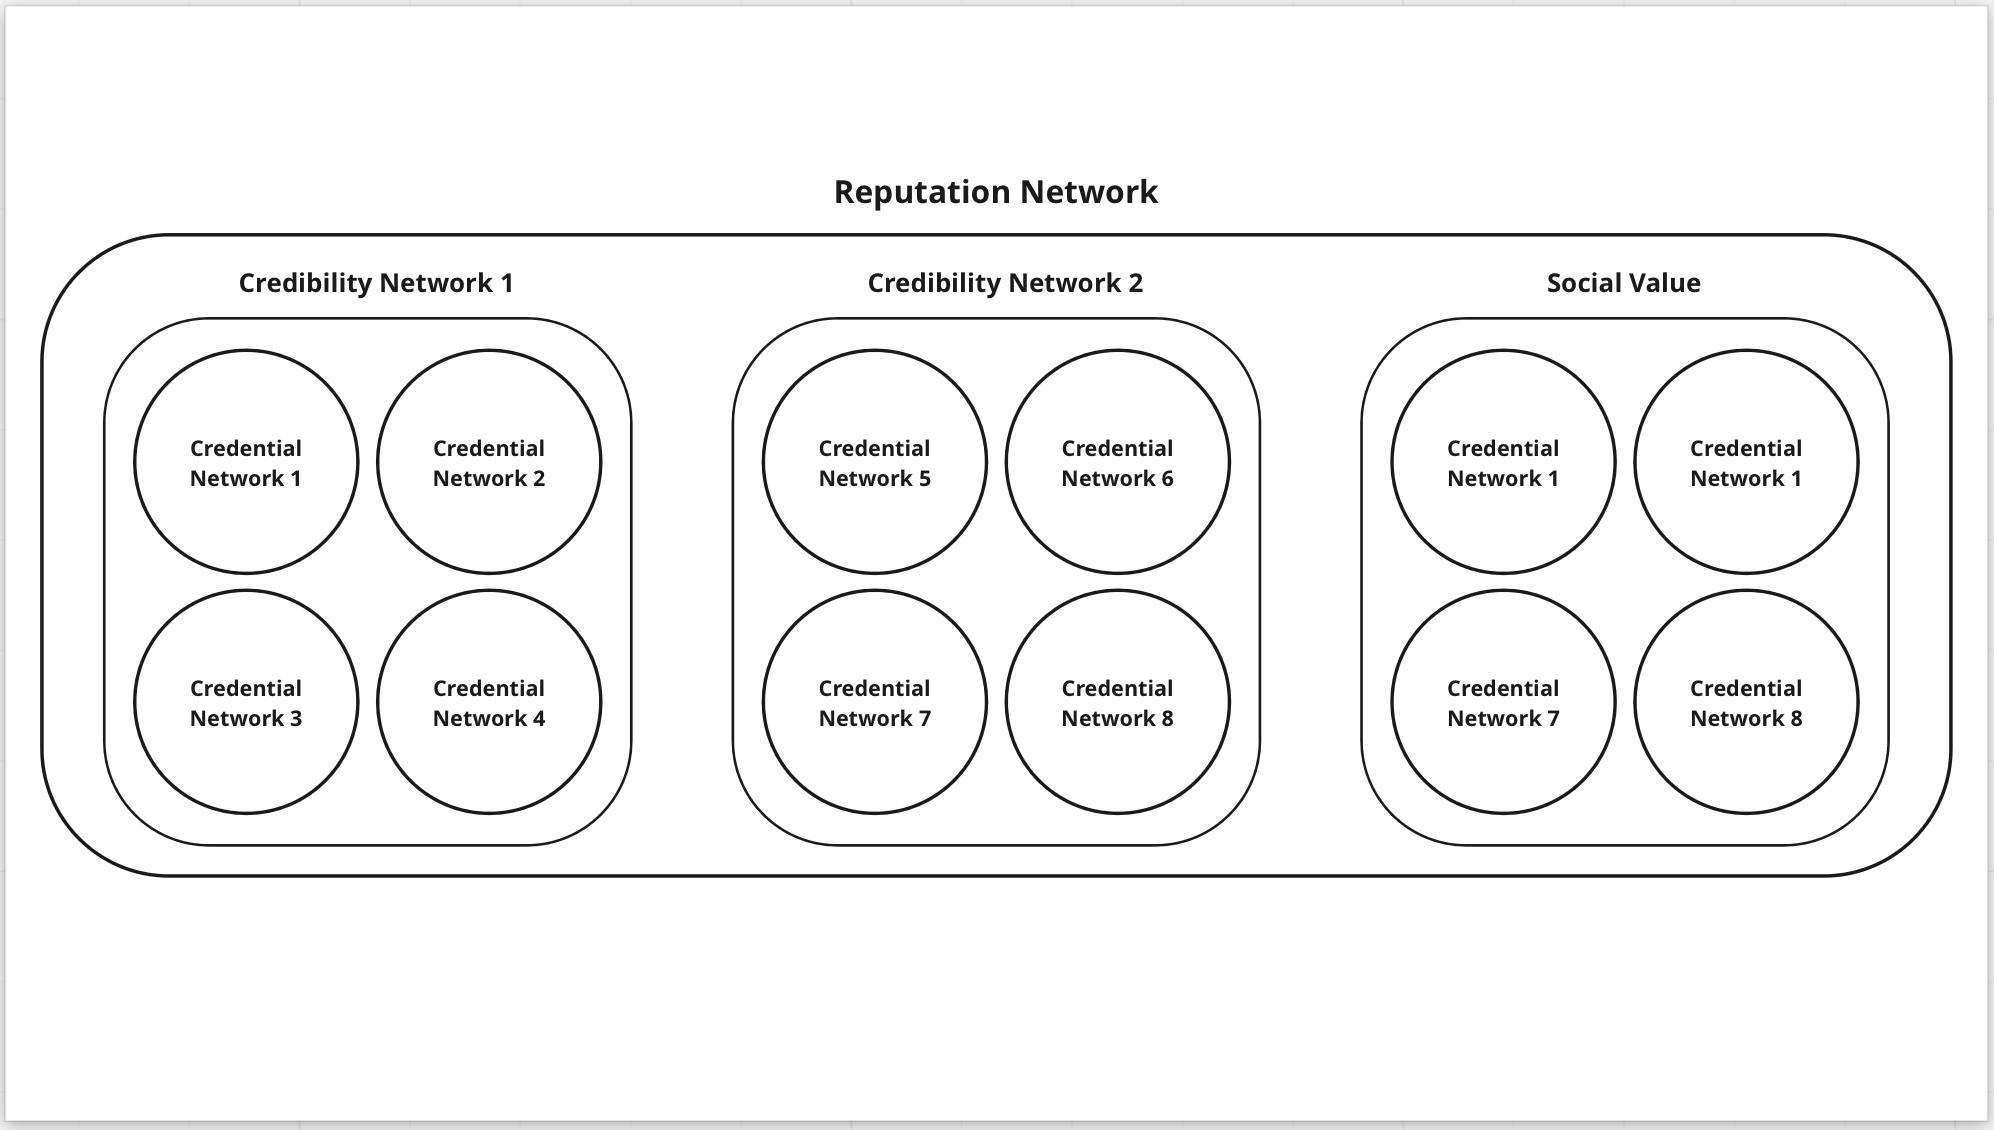 Fig. 4 Reputation Network